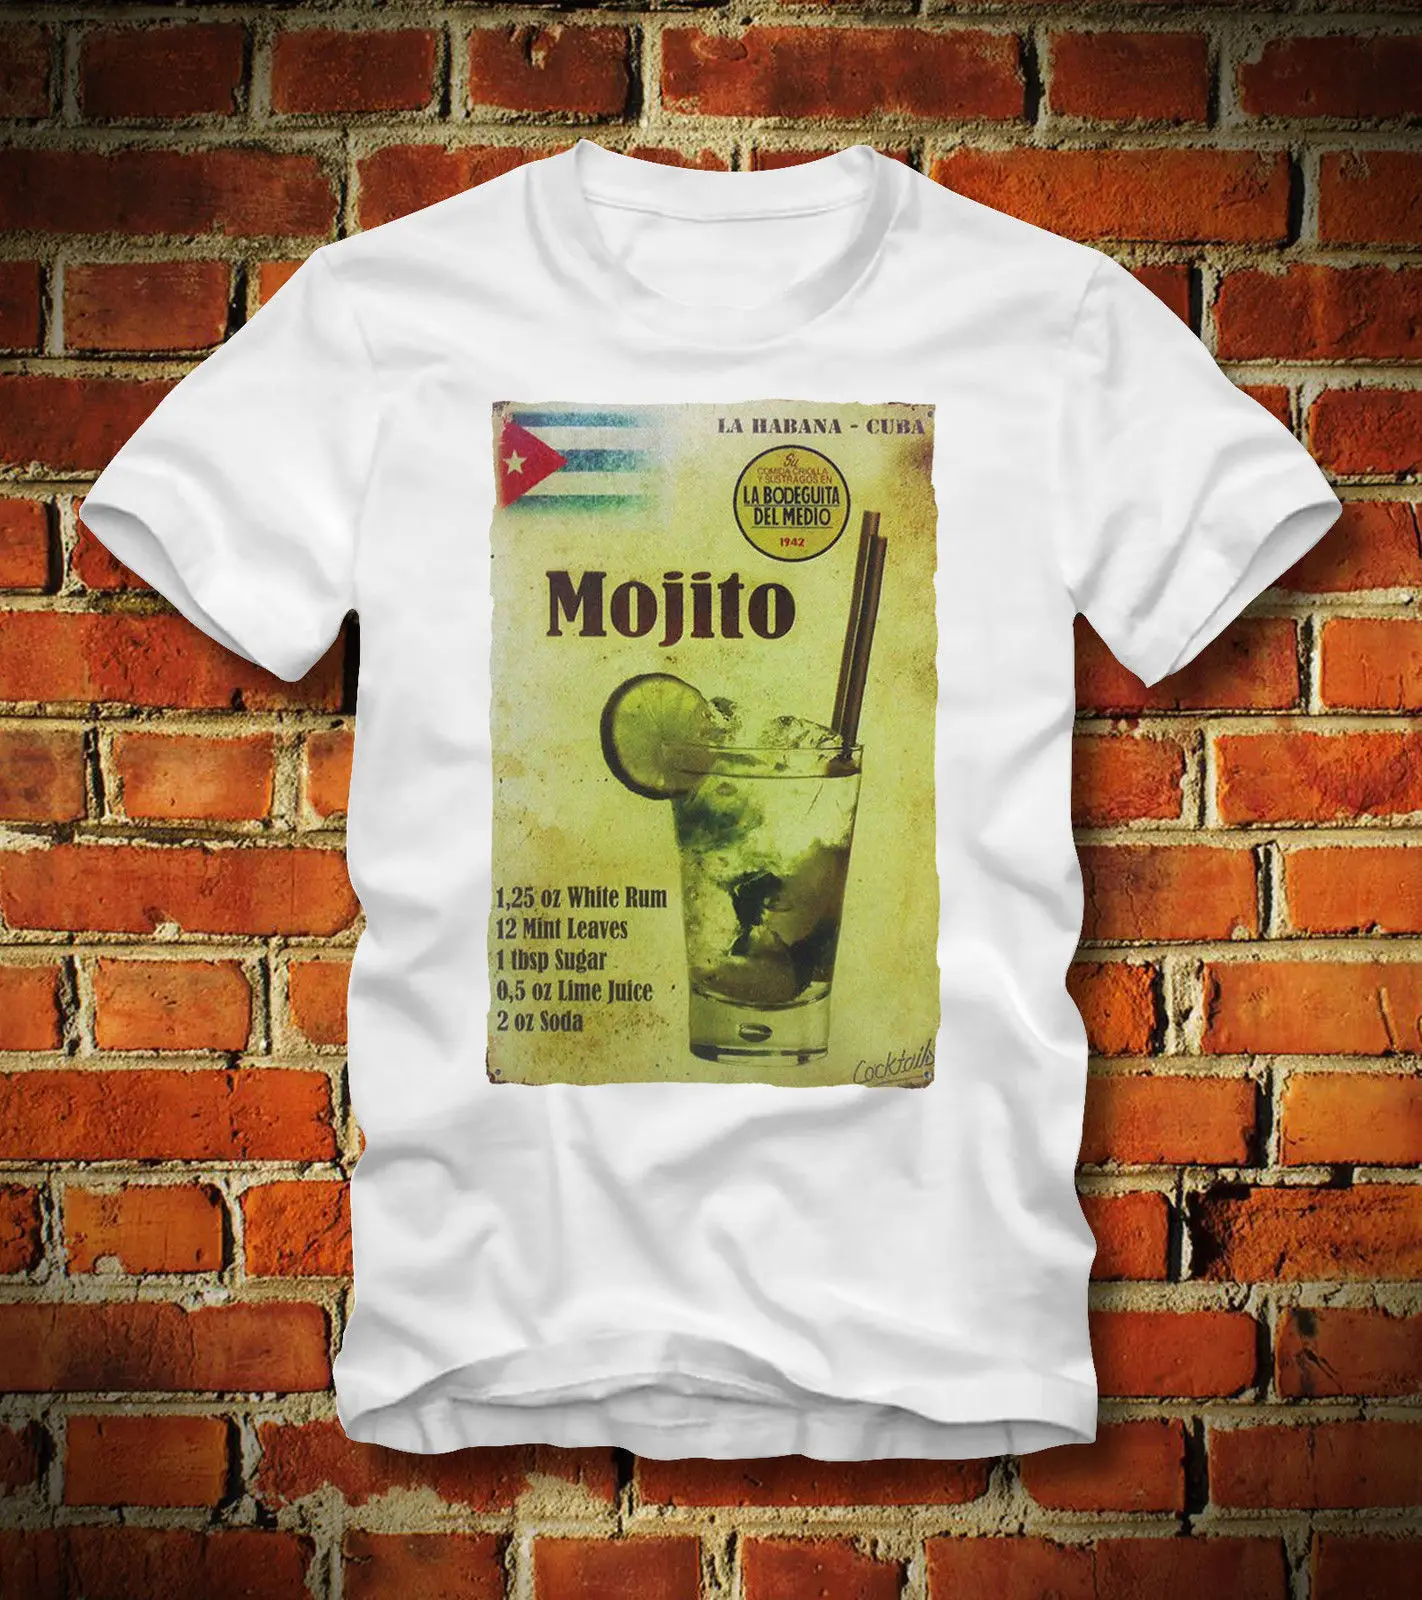 

Hot Sale 100% cotton T SHIRT MOJITO CUBA KUBA HAVANNA COCKTAIL ALKOHOL ALCOHOL REZEPT NEU Tee shirt